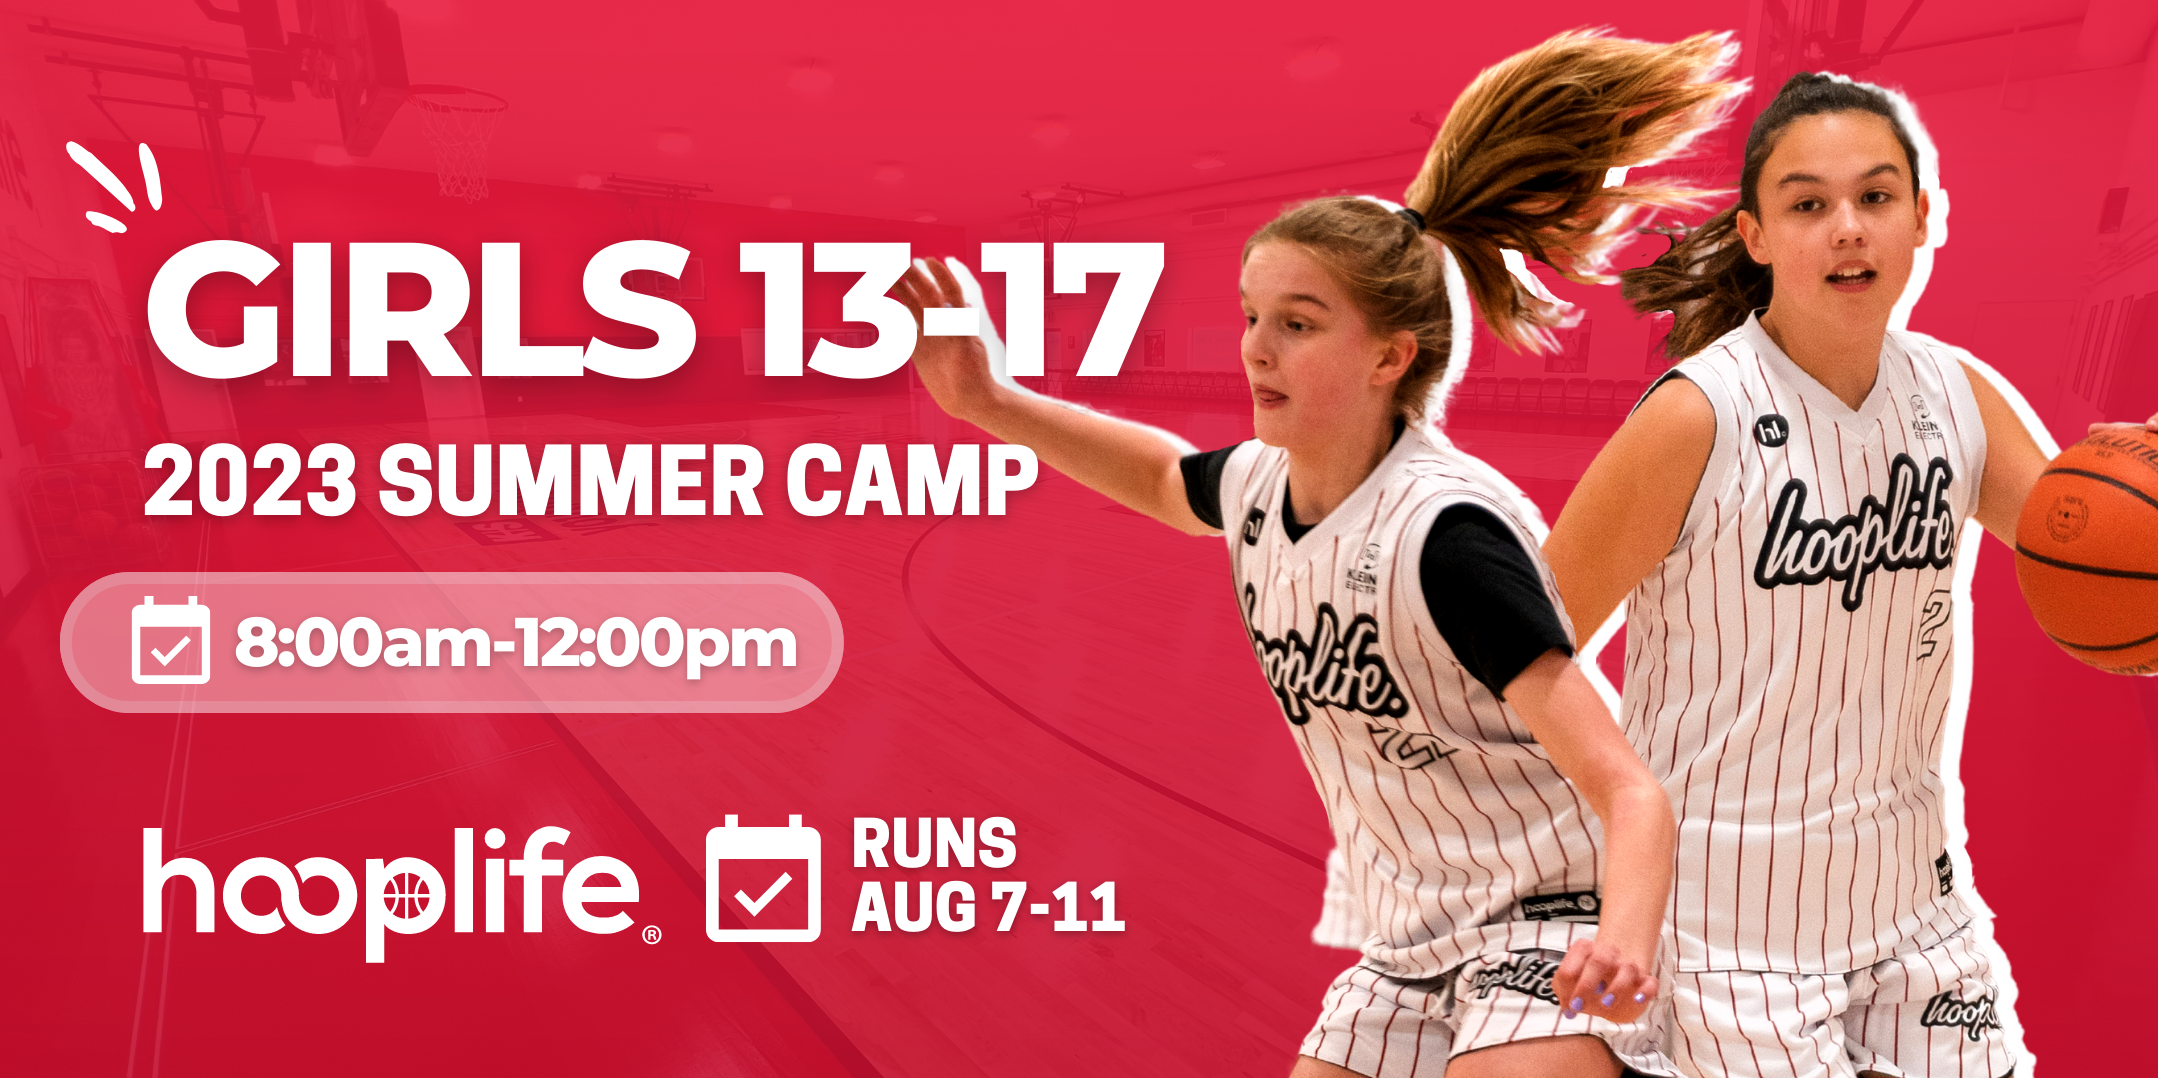 Girls 13-17 Summer Camp | Aug 7-11